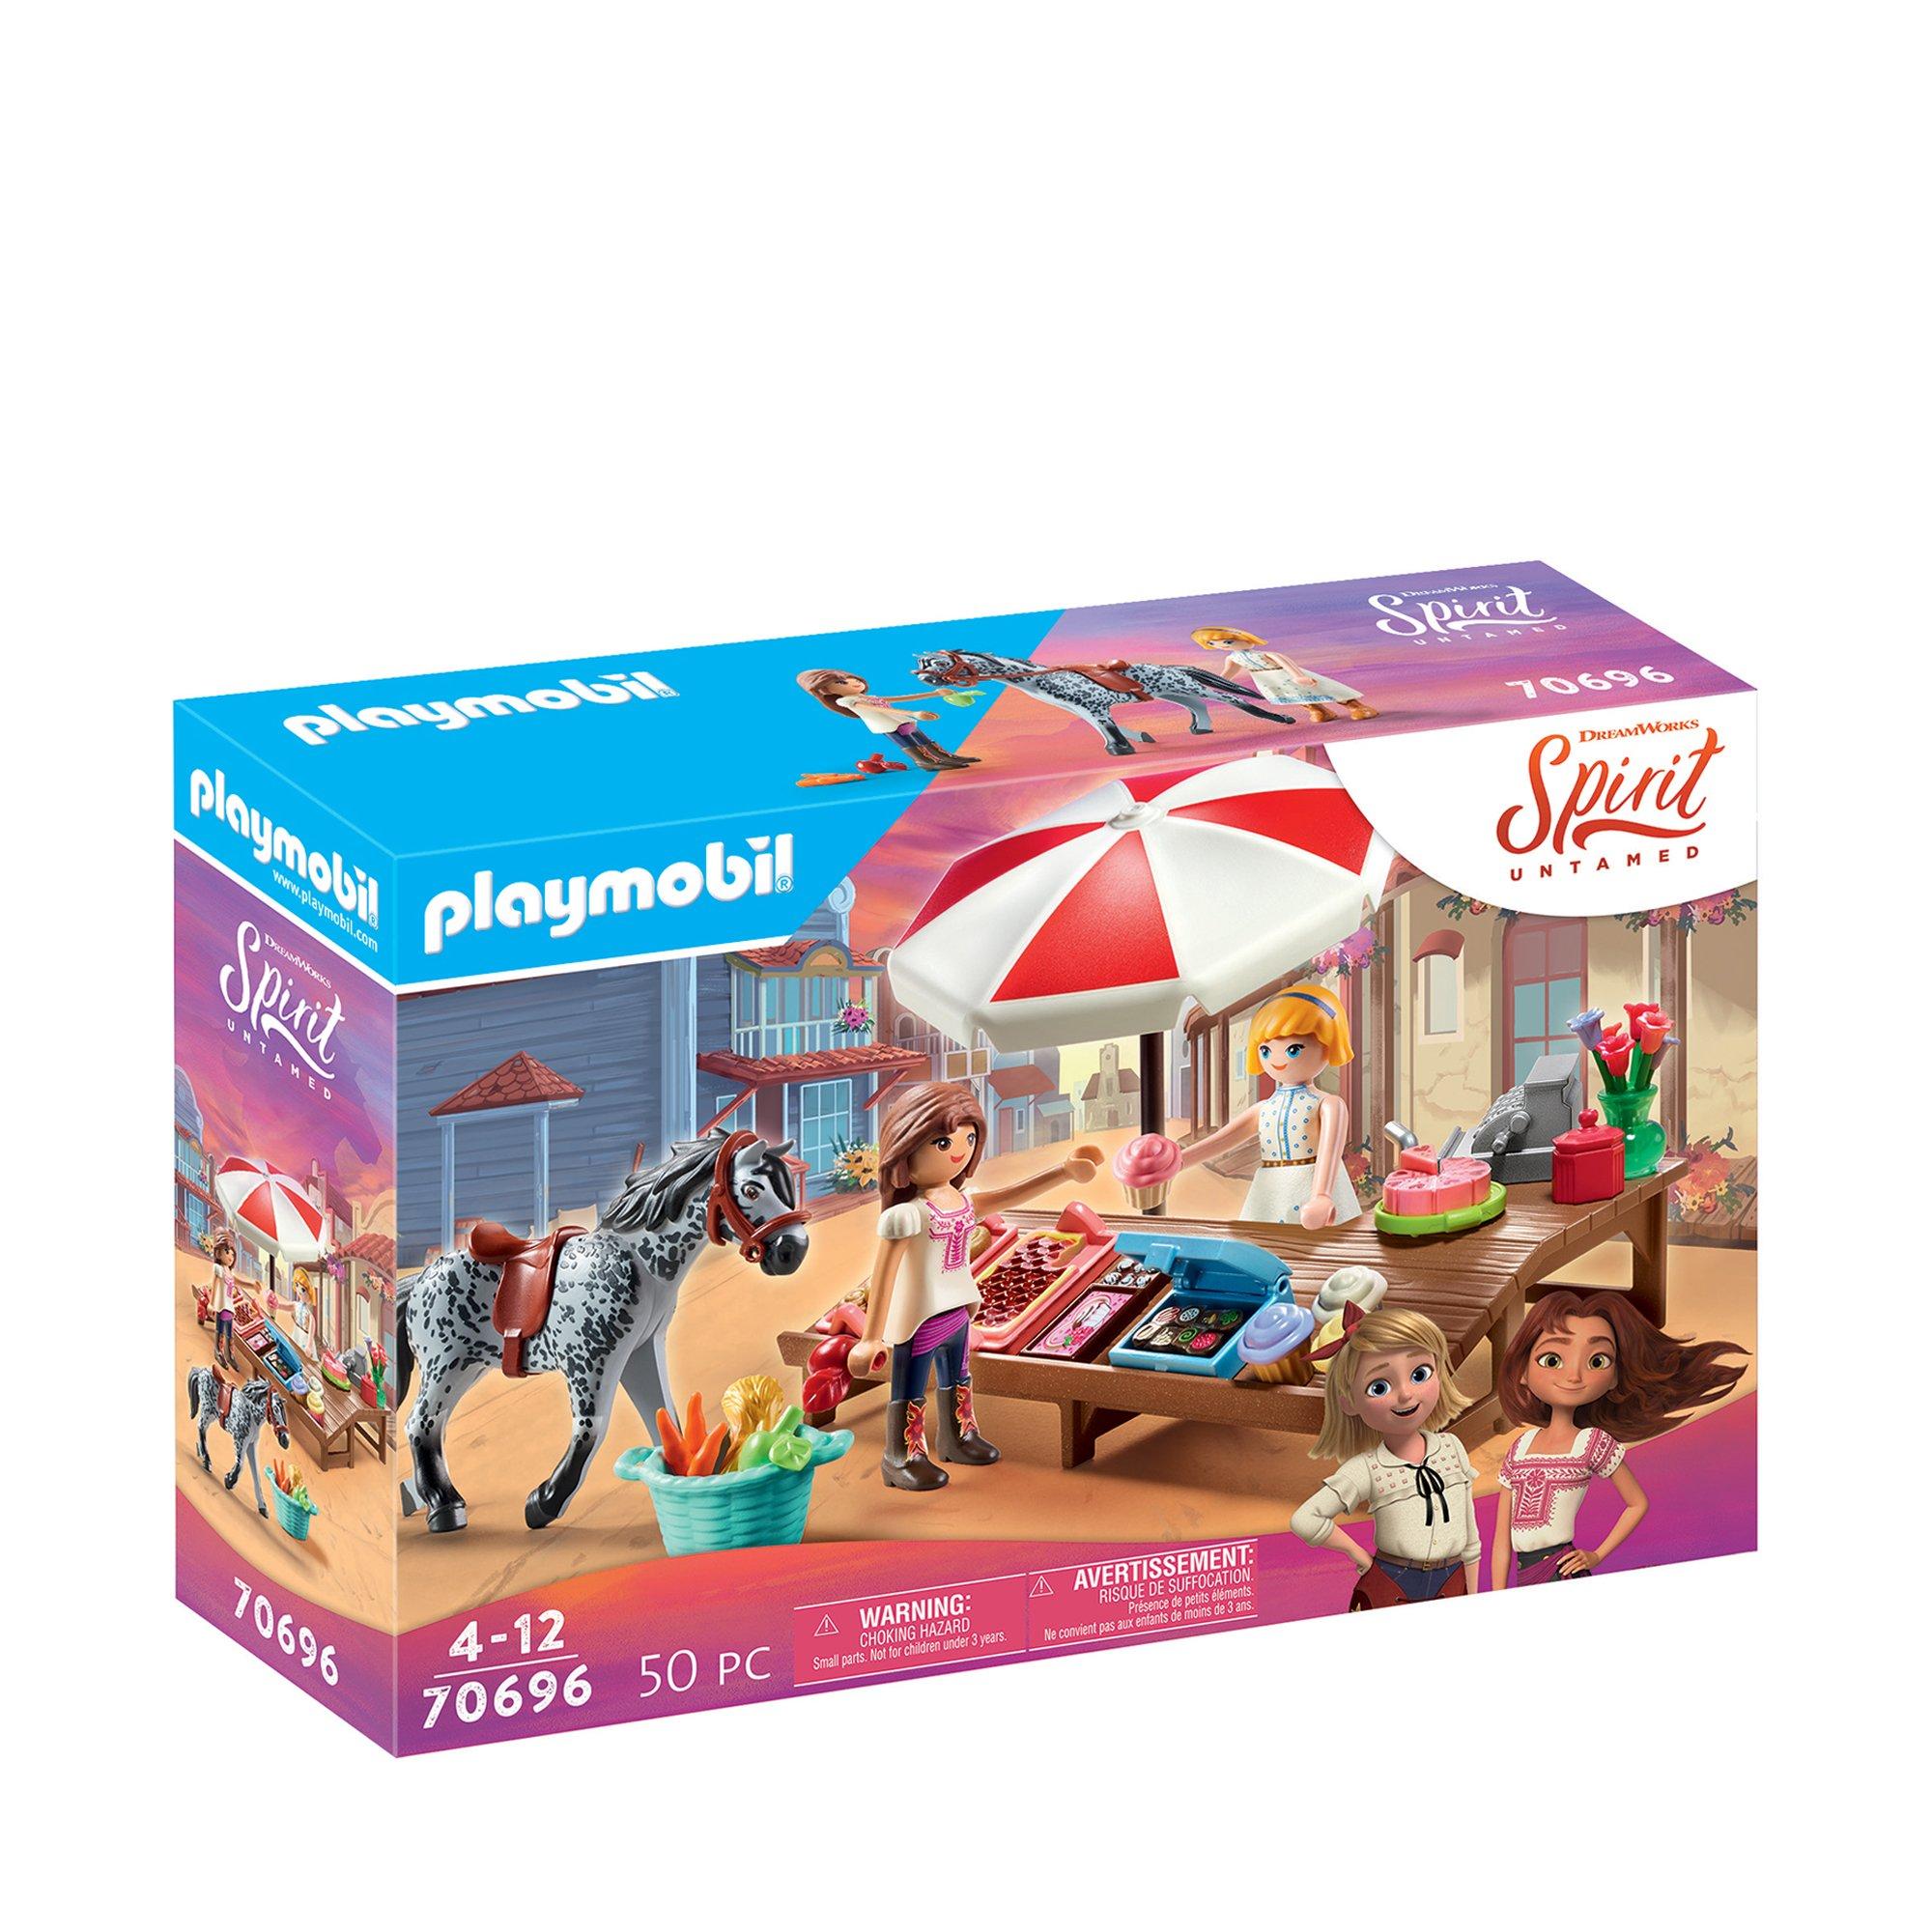 Image of Playmobil 70696 Miradero Süssigkeitenstand